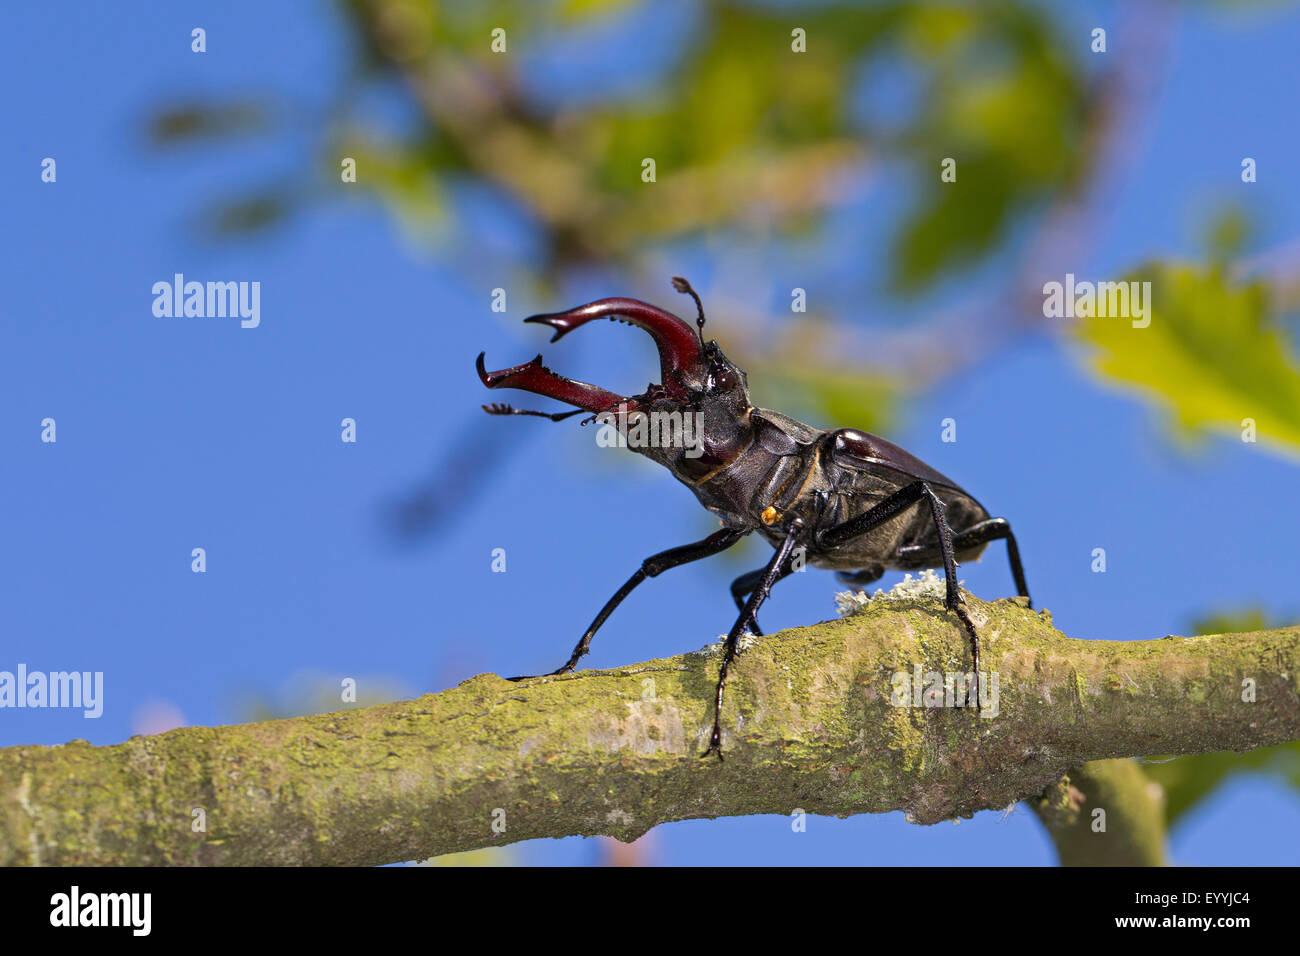 Stag beetle, stag beetle (Lucanus cervus), homme, Allemagne Banque D'Images